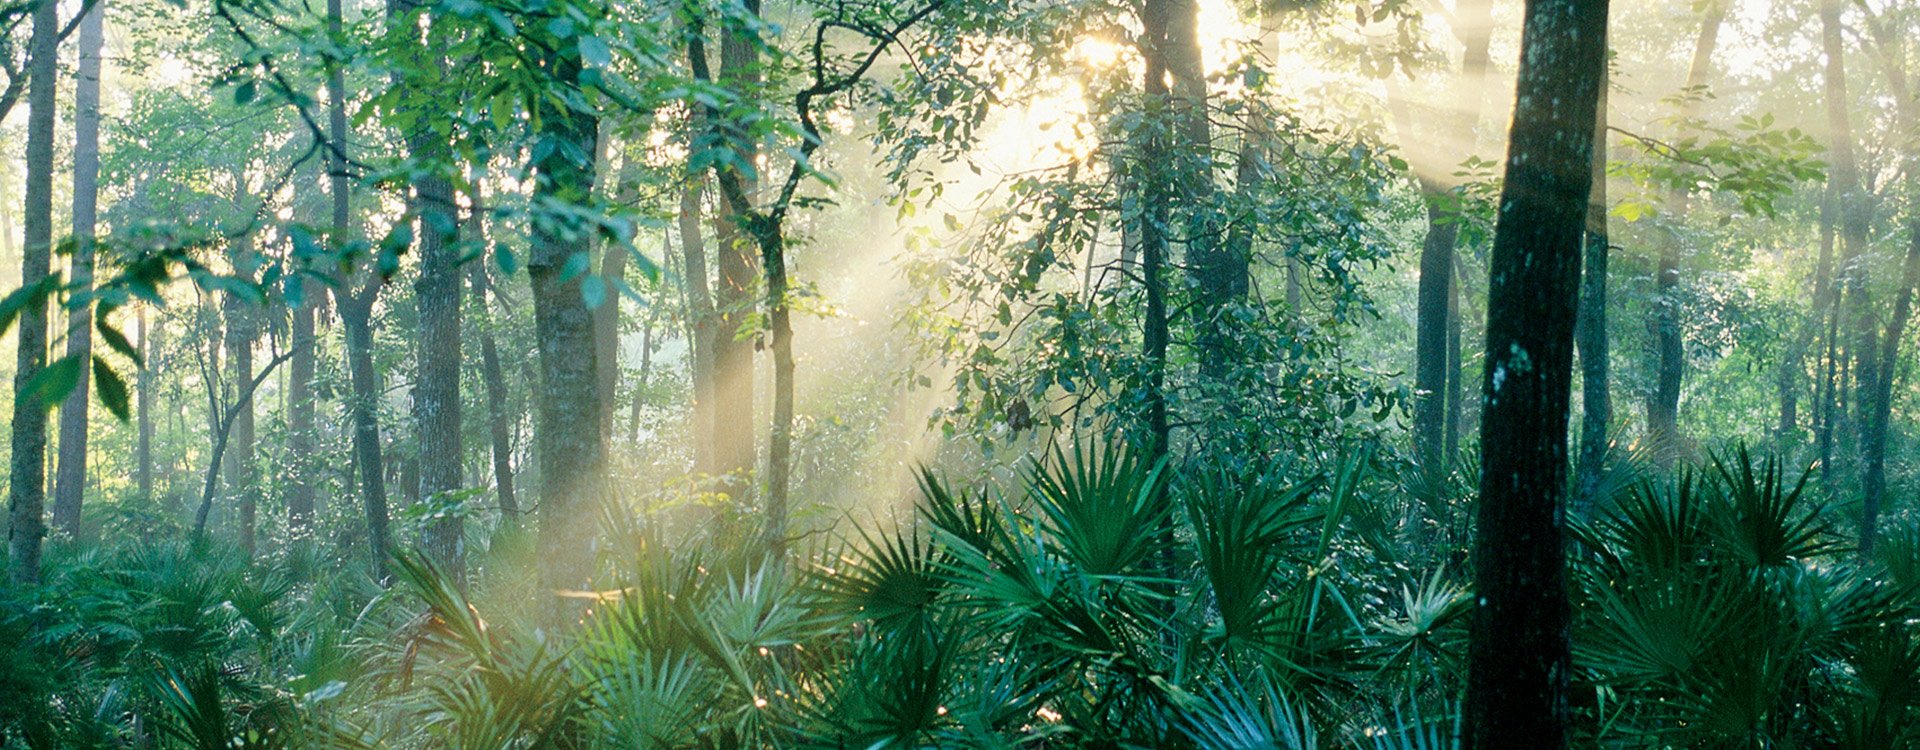 Florida_Ocala Forest